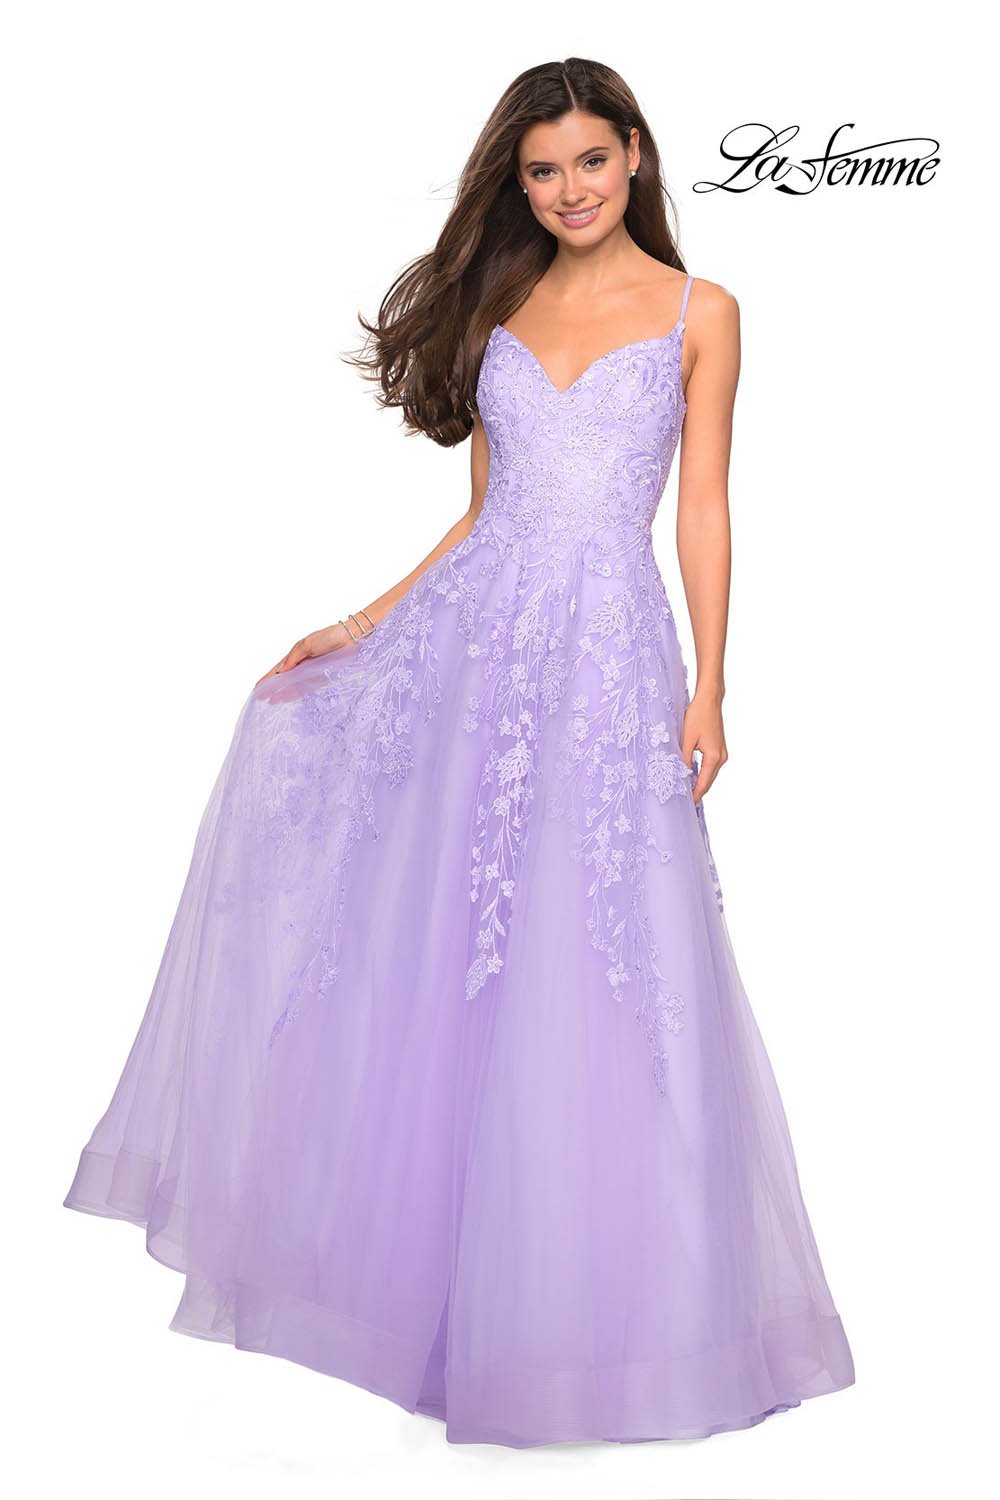 La Femme 27819 dress images in these colors: Dusty Blue, Lavender, Light Pink.